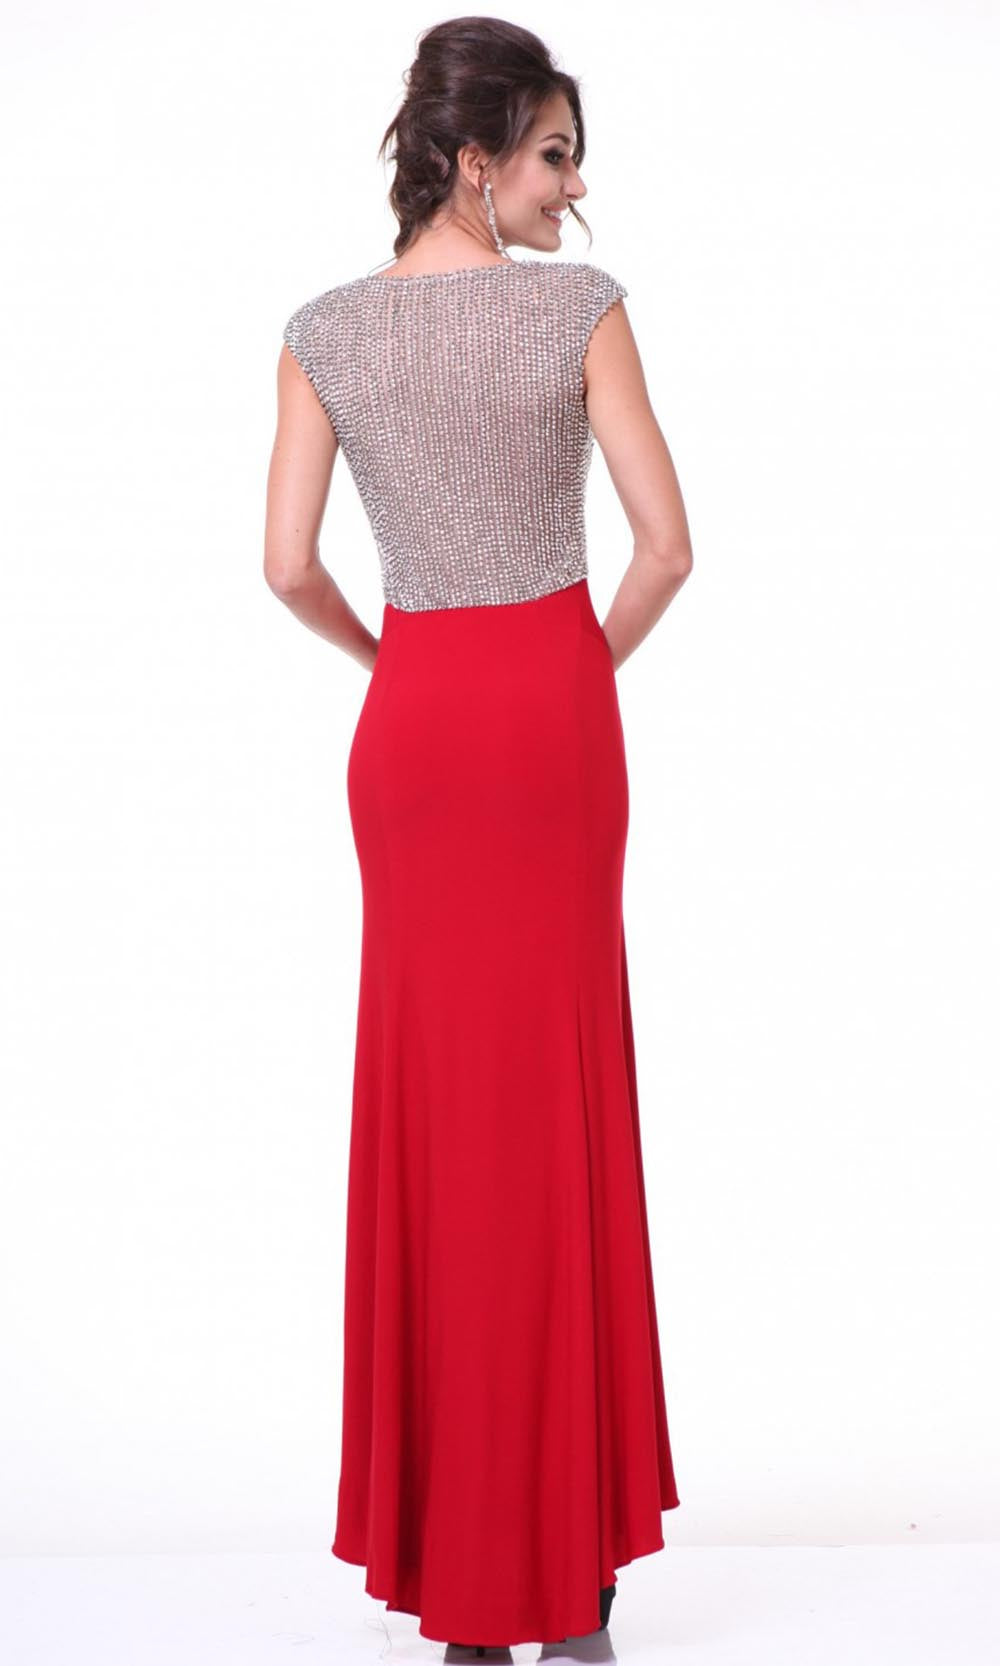 Cinderella Divine - 8115 Beaded Sheath Evening Dress In Red